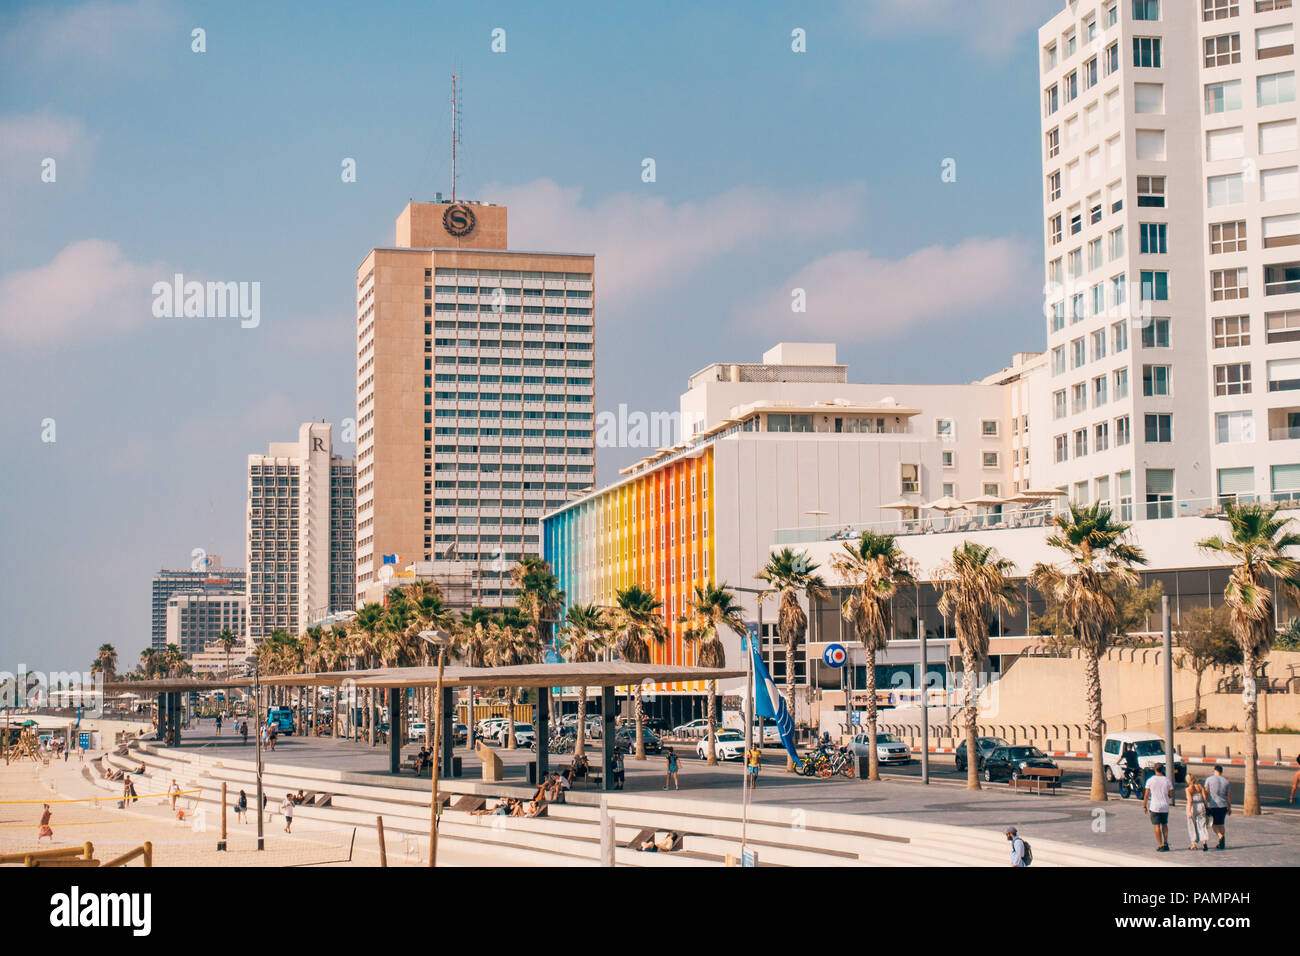 L'hôtel Dan, arc-en-ciel sur le front de mer de Tel Aviv, Israël Banque D'Images